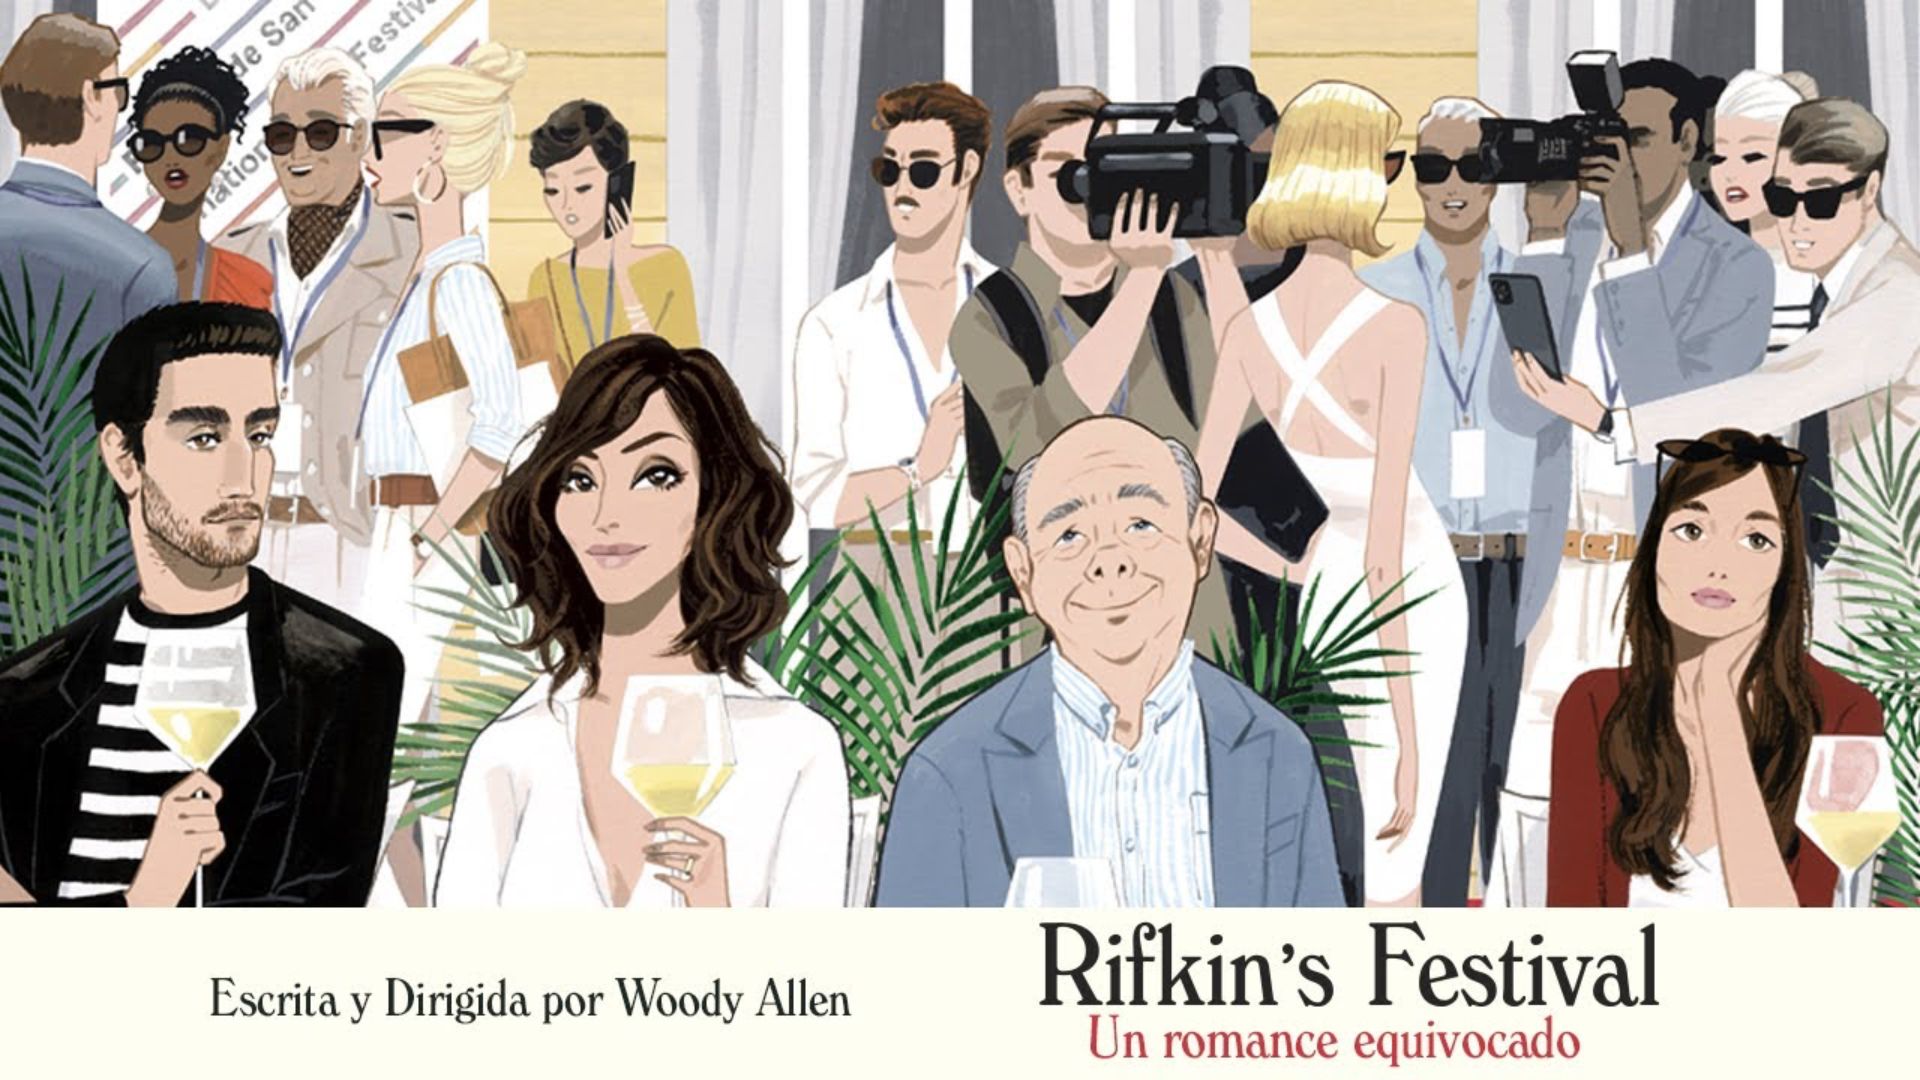 poster de la cinta rifkins festival de woody allen